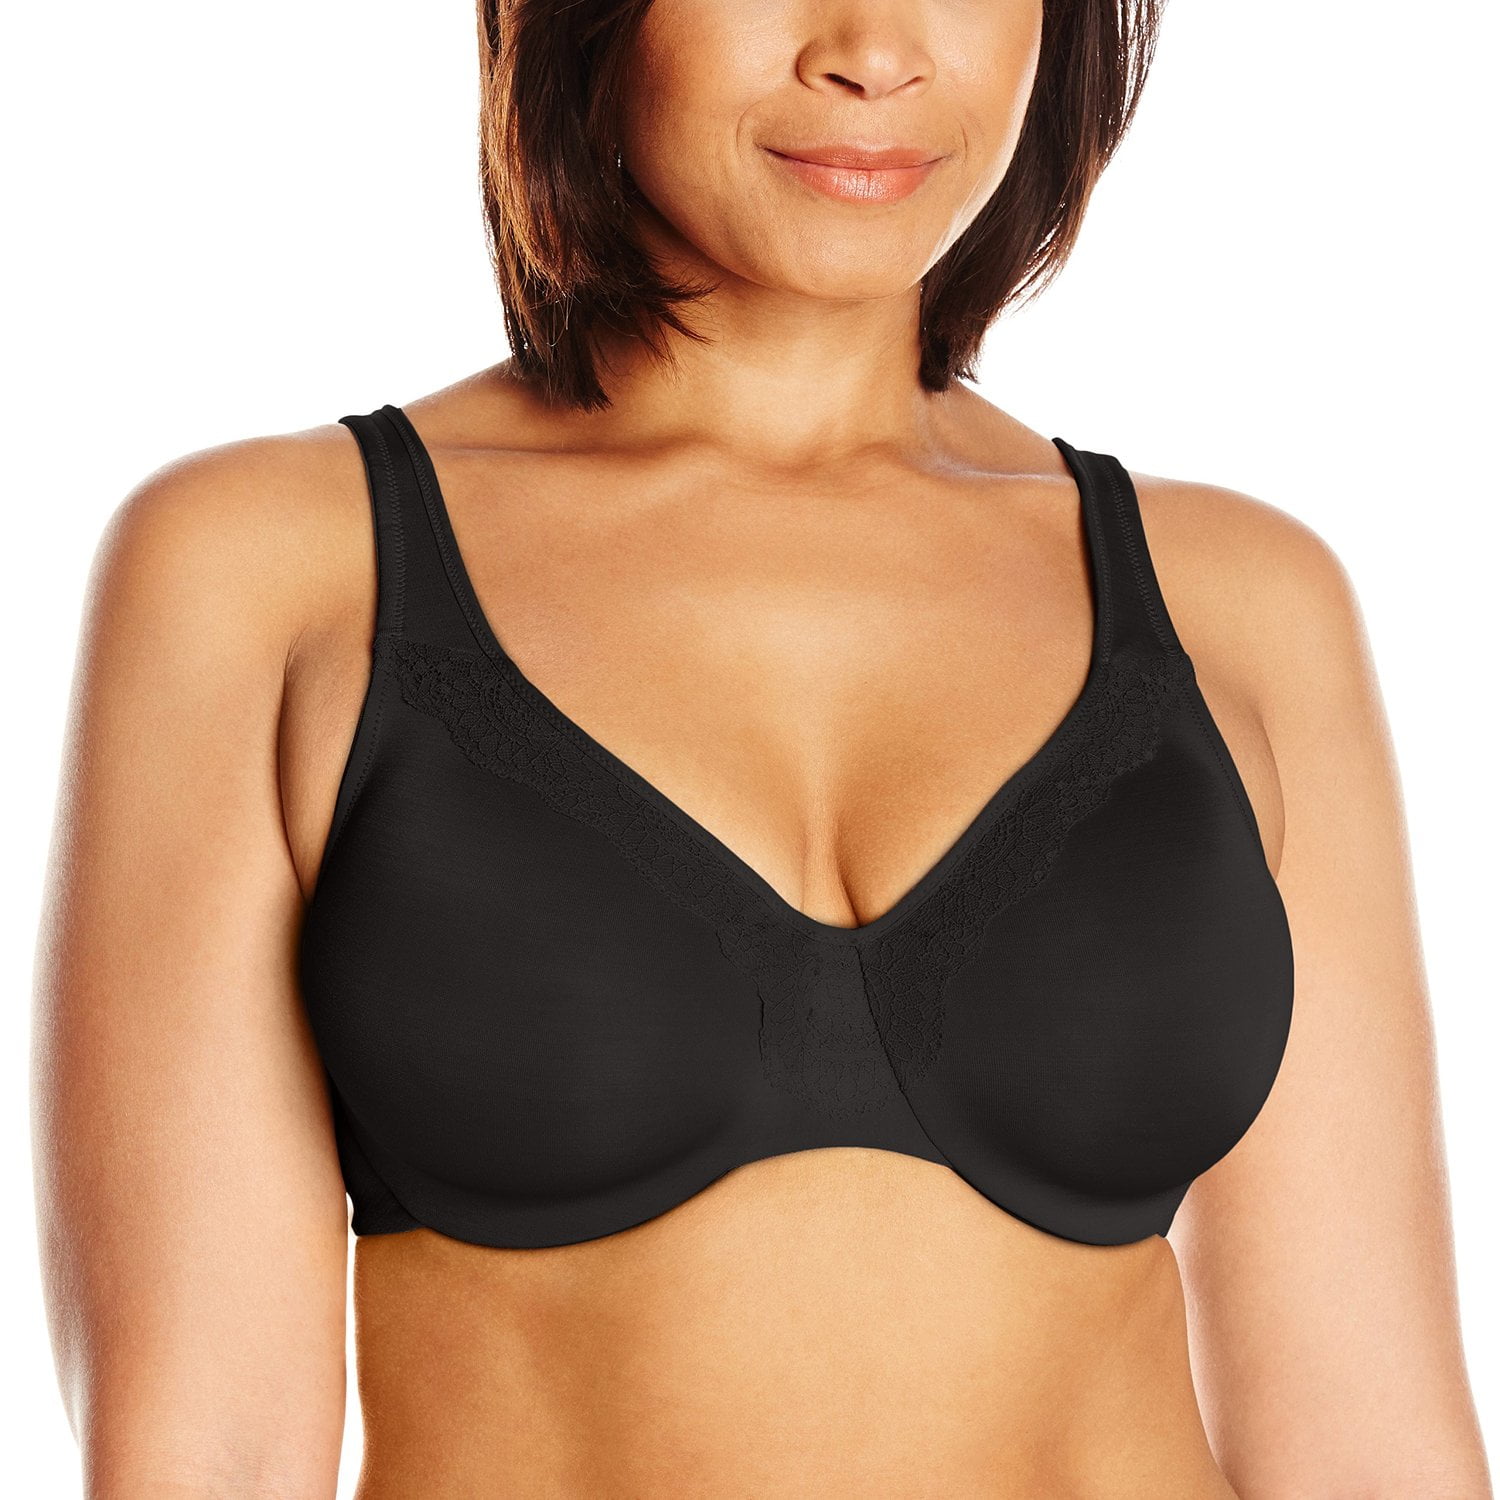 Lilyette by Bali Women Adjustable Soft minimizer bras 